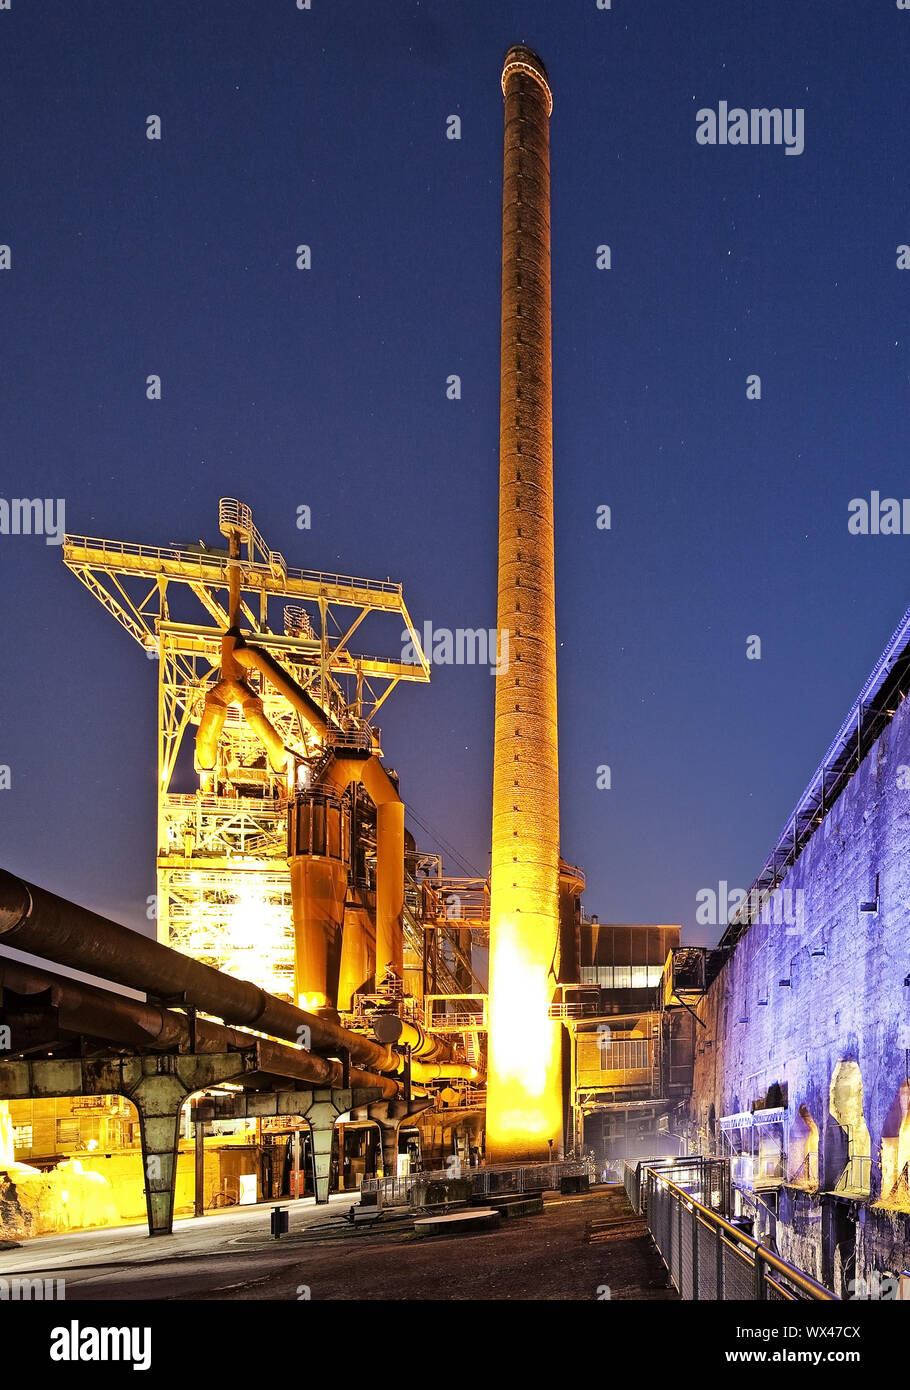 Illuminated Heinrichshuette with blast furnace, Hattingen, Ruhr area, Germany, Europe Stock Photo